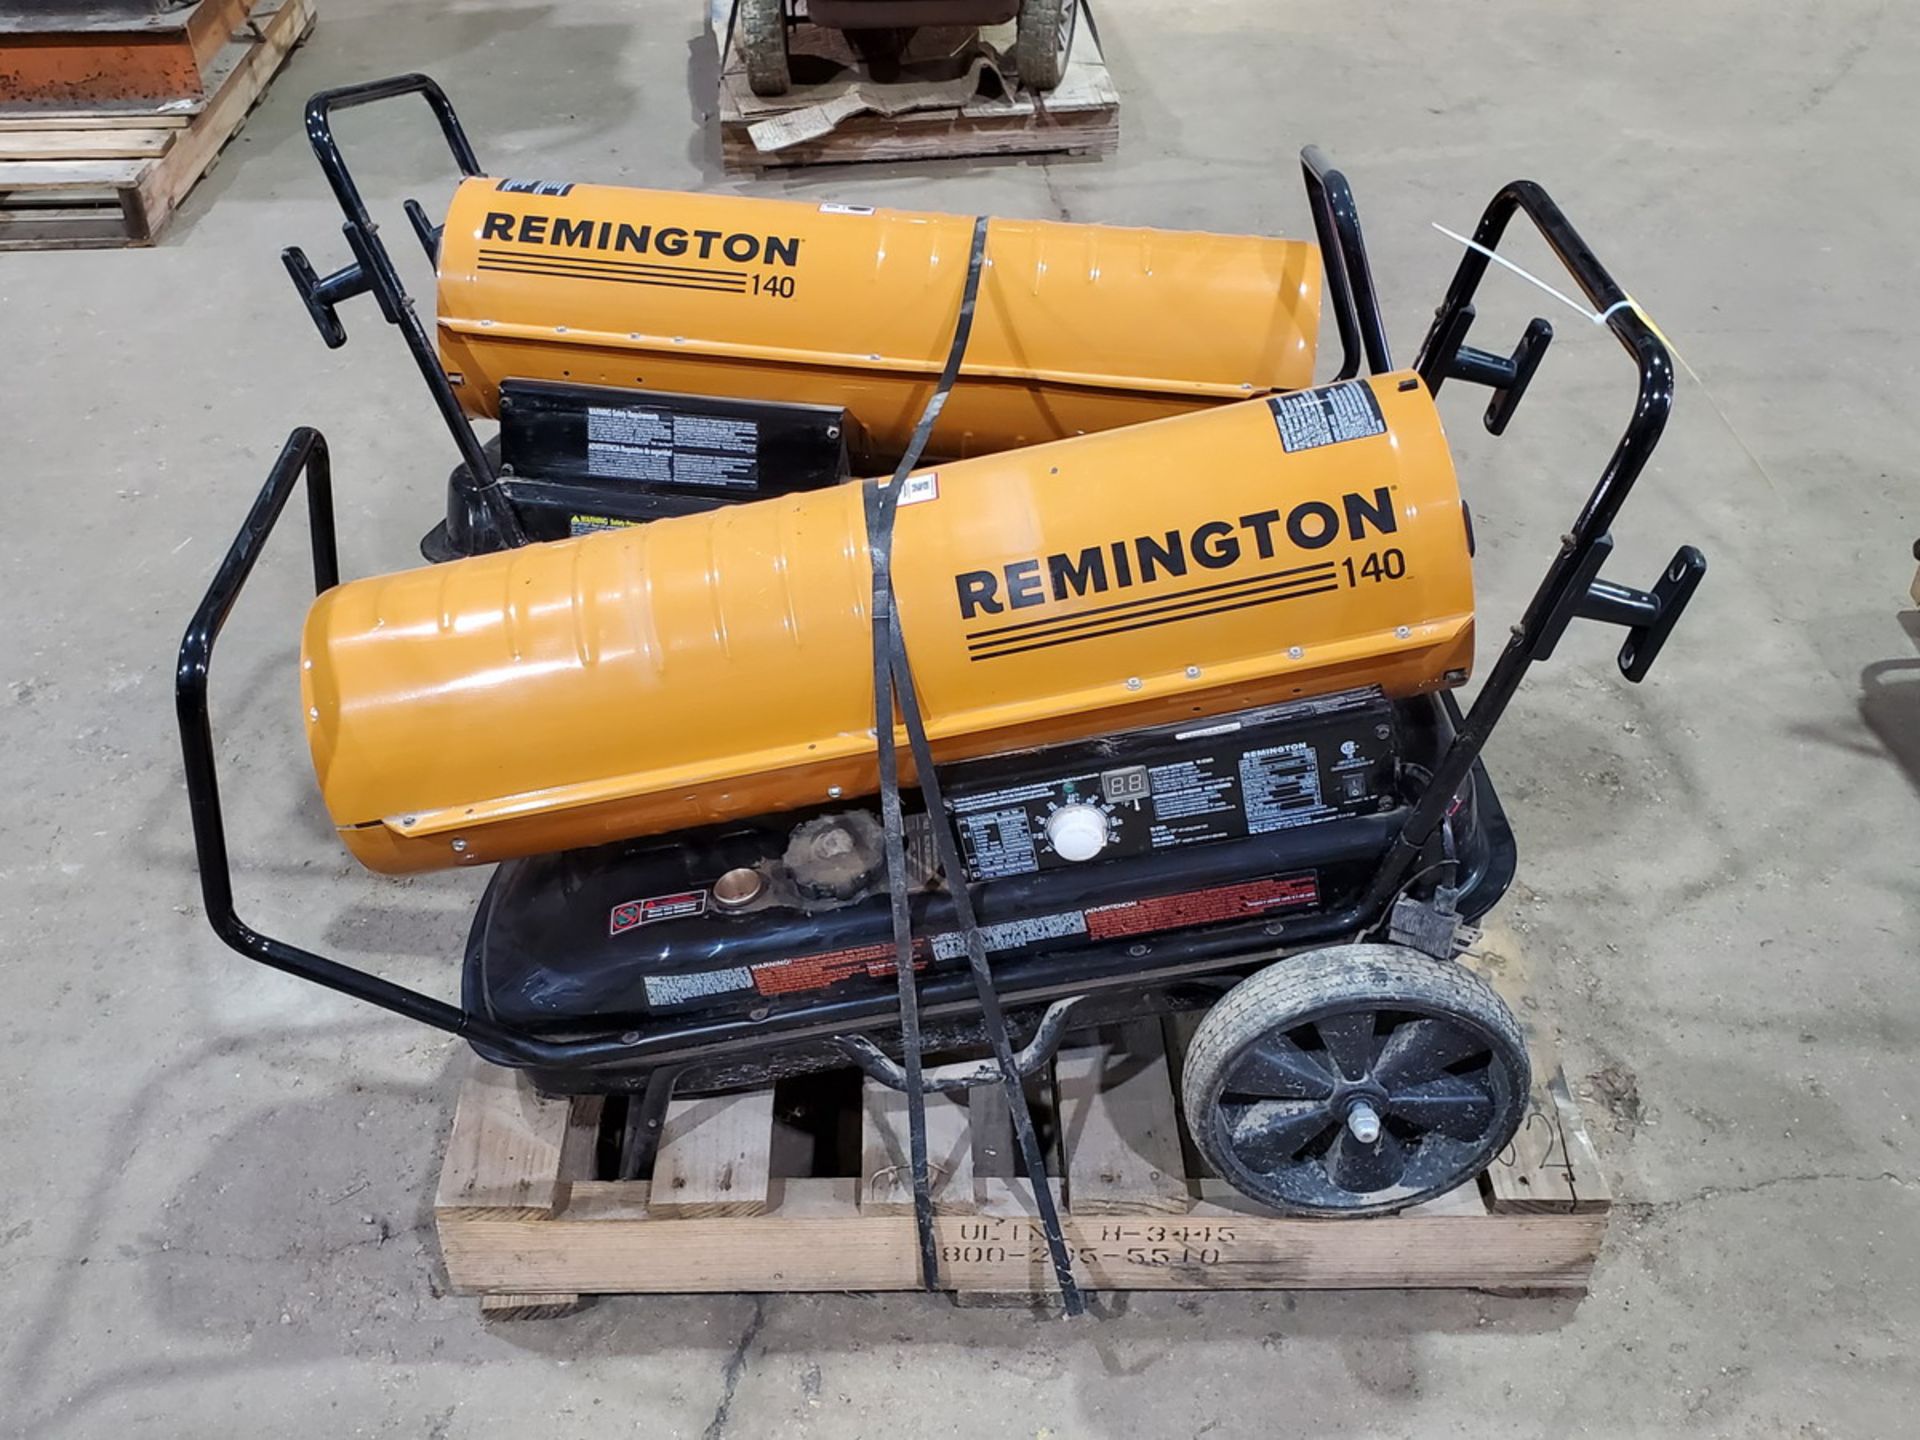 Remington 140 (2) Portable Kerosene Heaters 140,000 BTU, 1PH